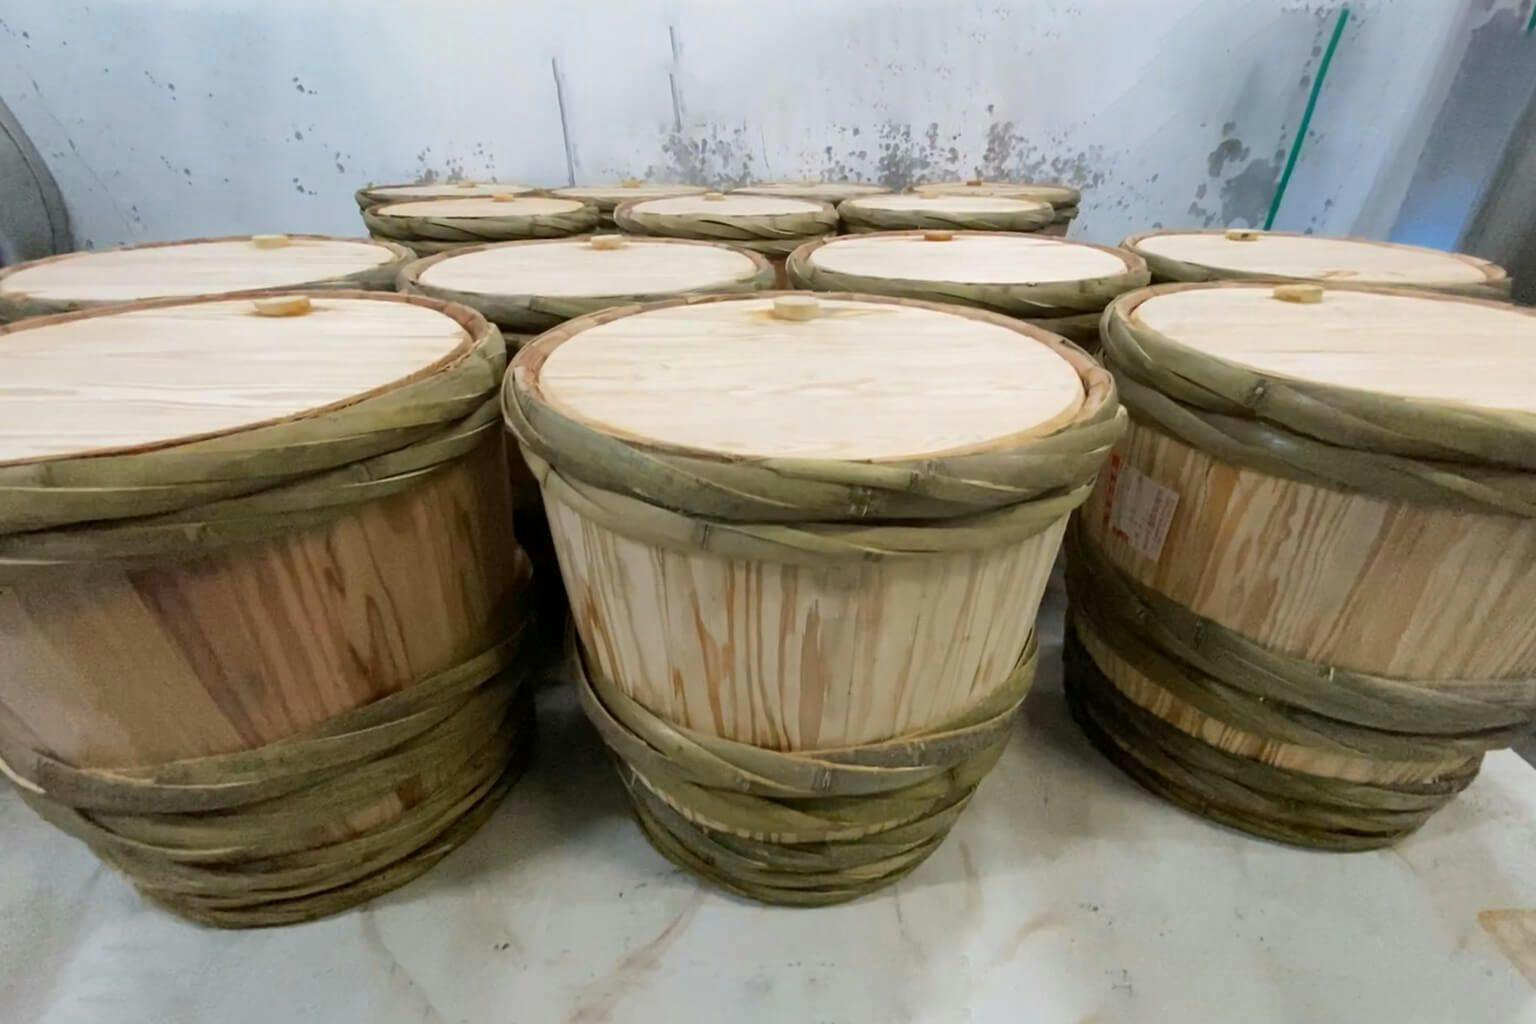 Sugi barrels made with Yoshinosugi cedar